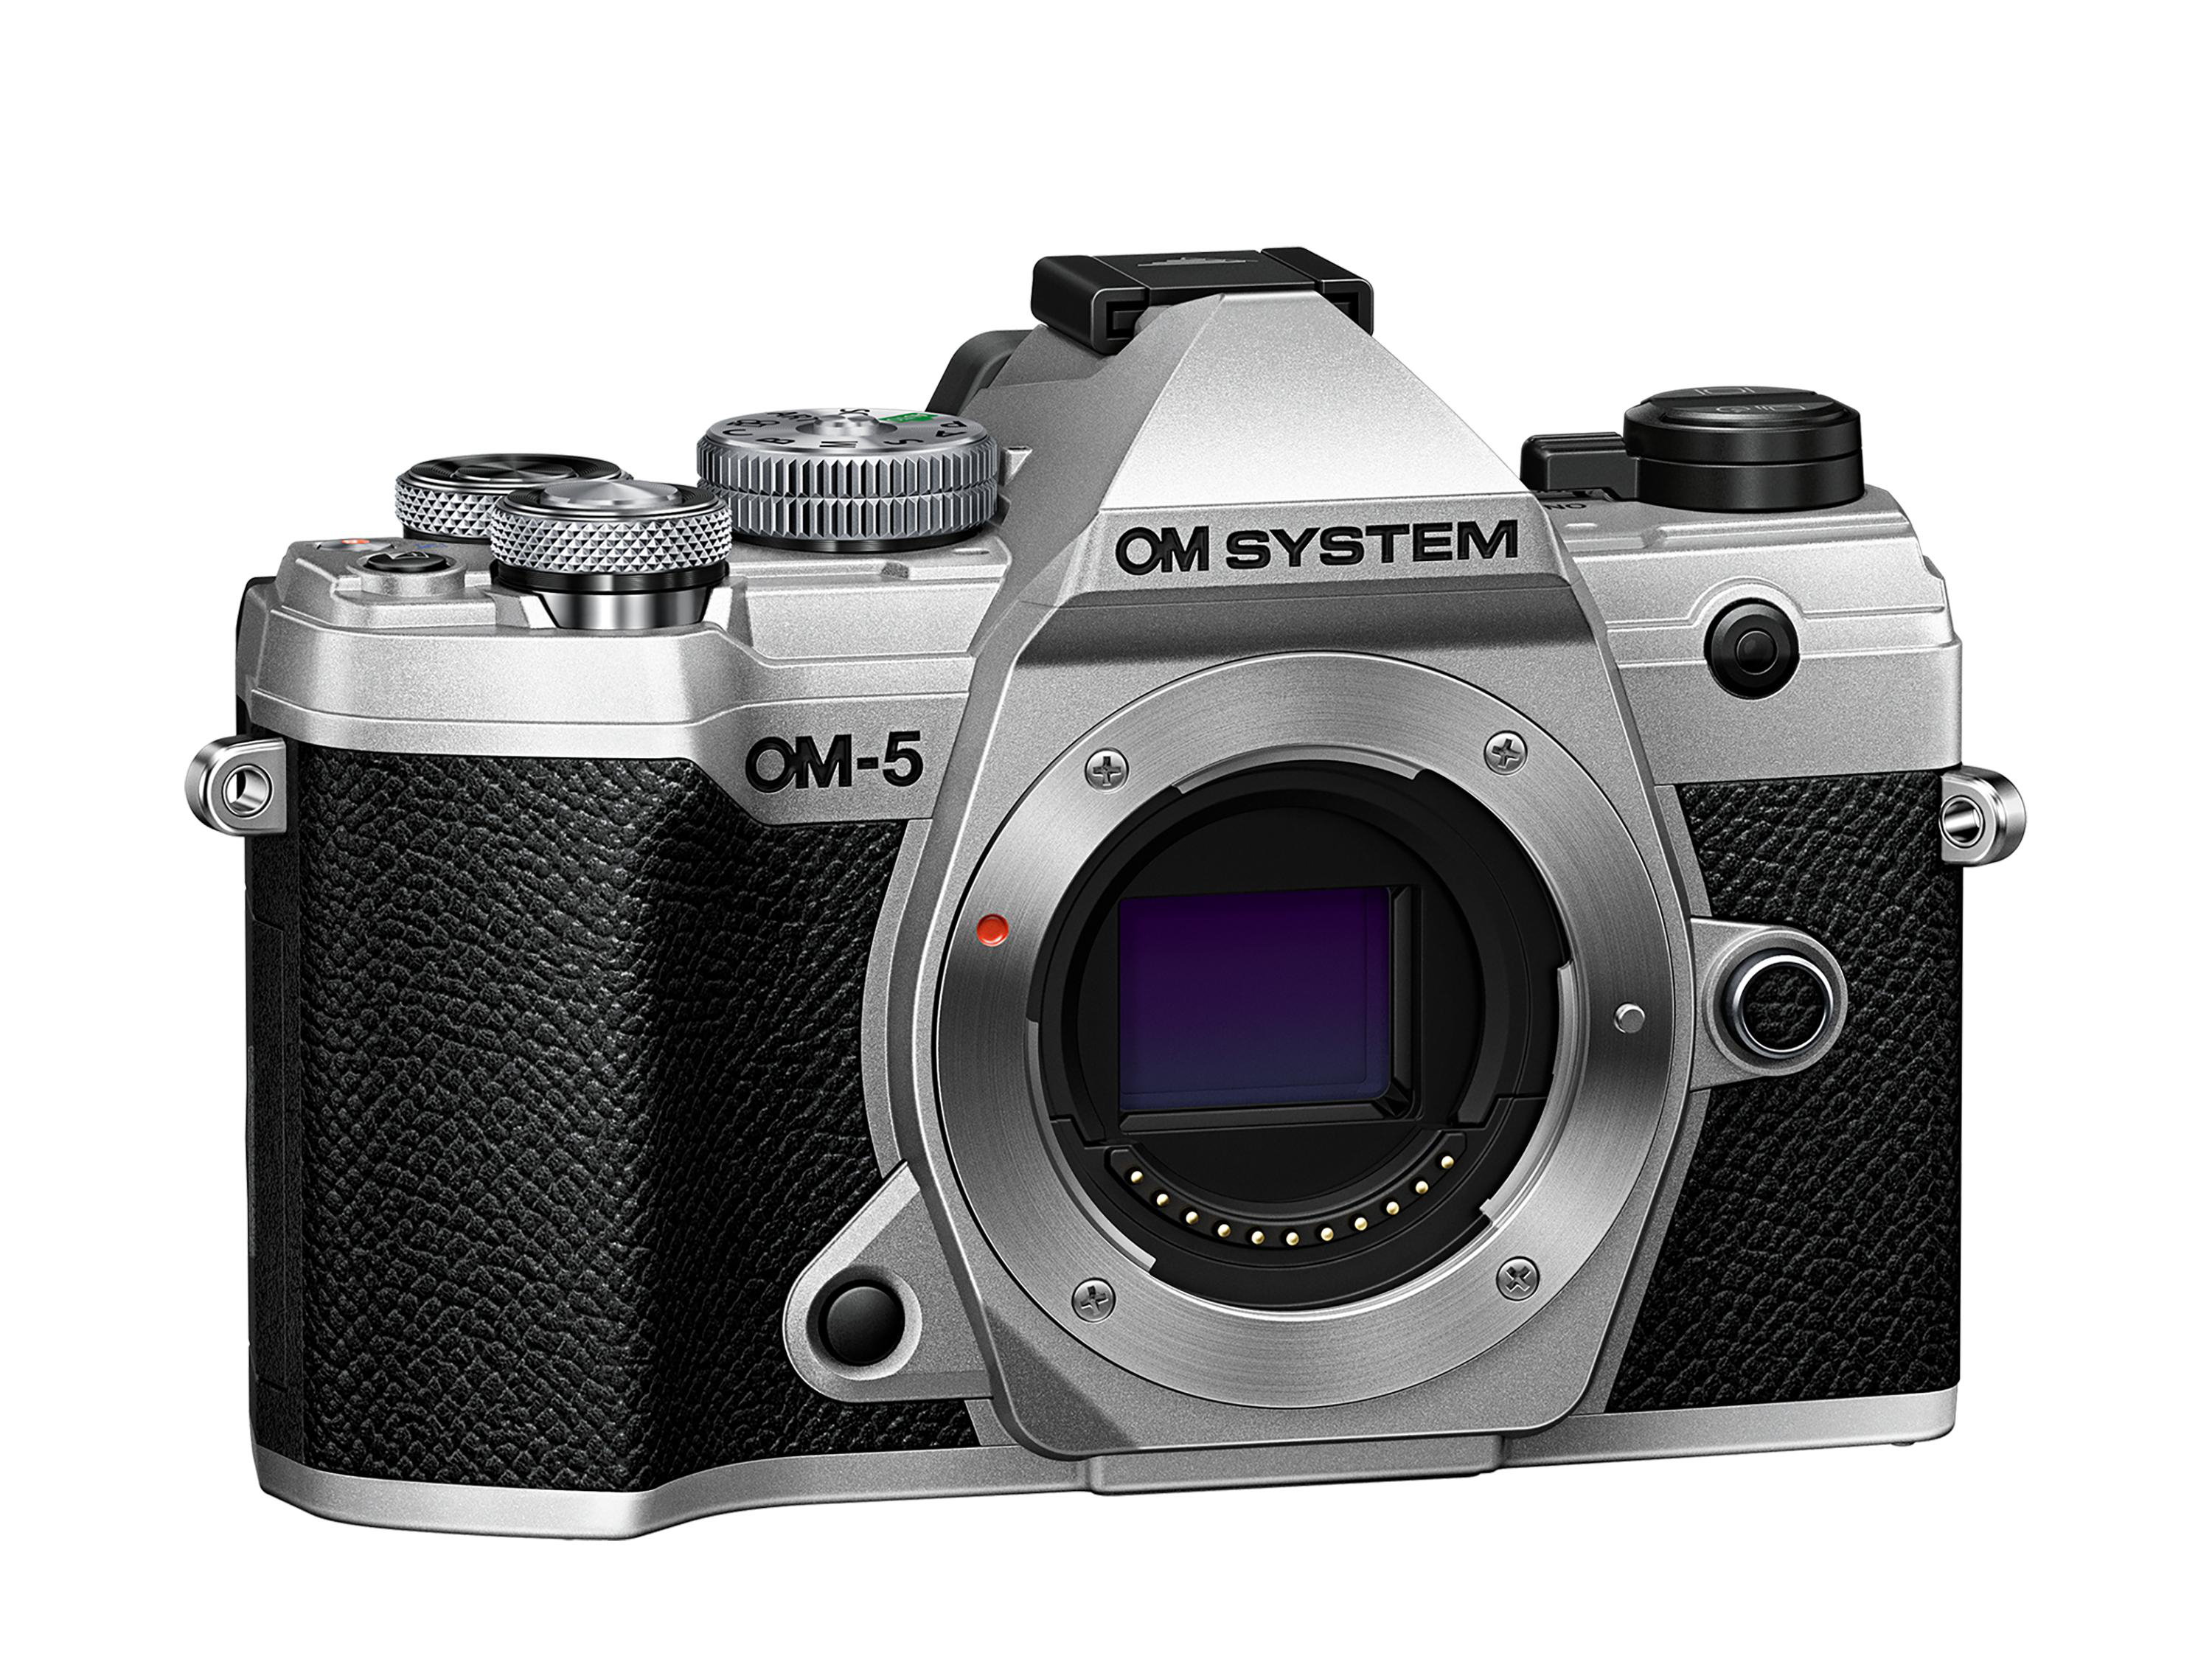 Systemkamera 7,6 OM-5 Body SYSTEM OM cm , WLAN Touchscreen, Display